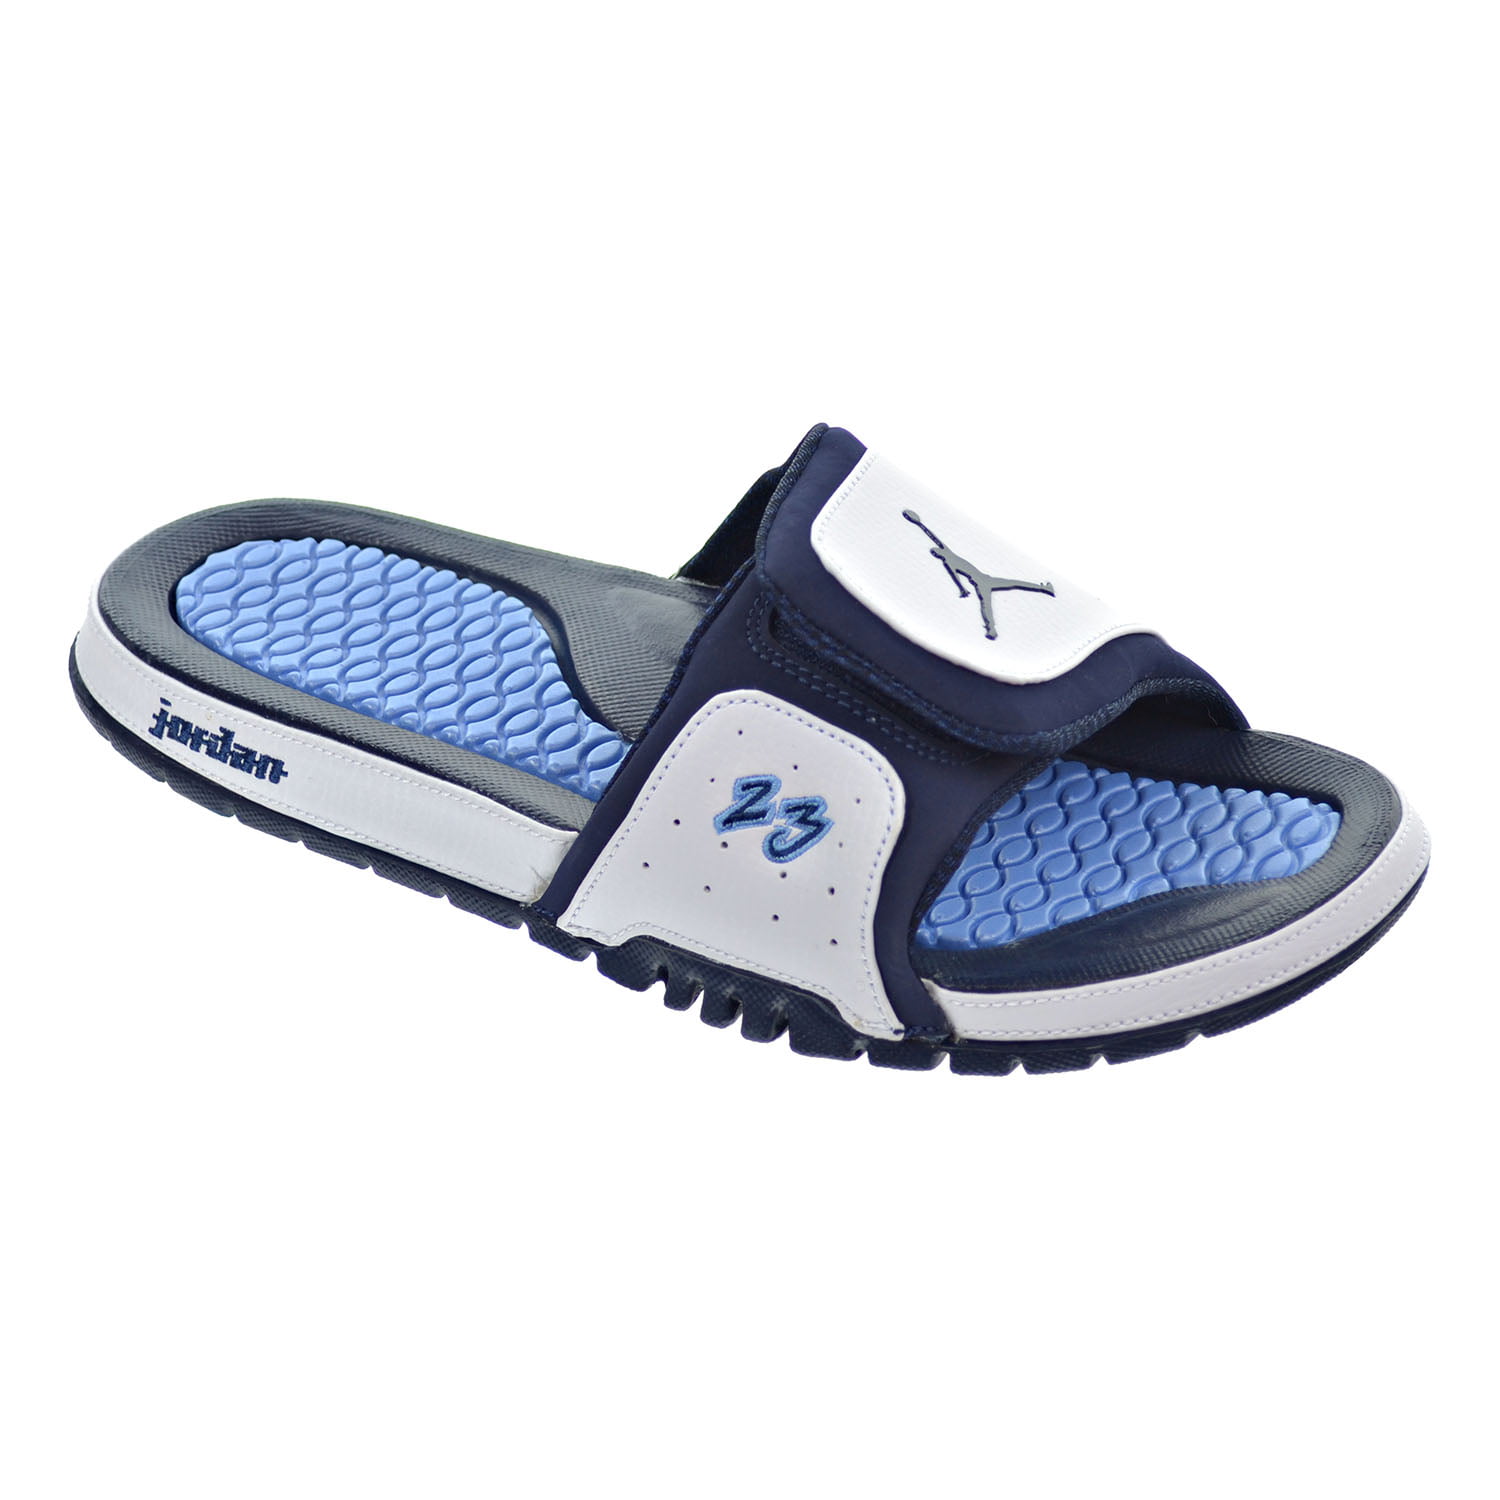 Jordan Hydro 2 Premier Men's Sandals 